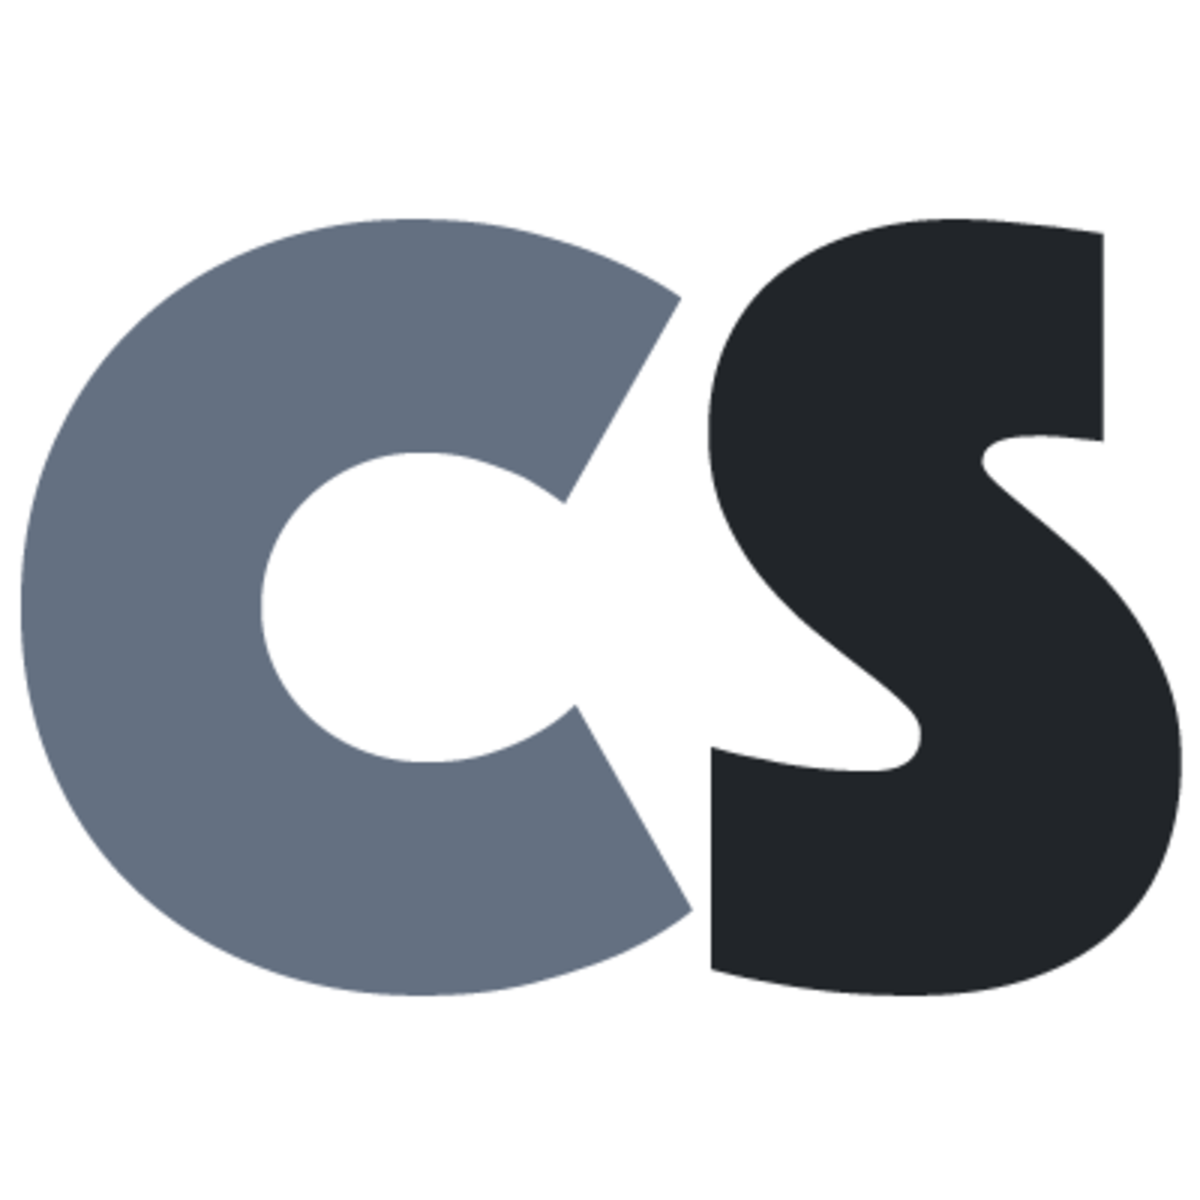 CS logo.